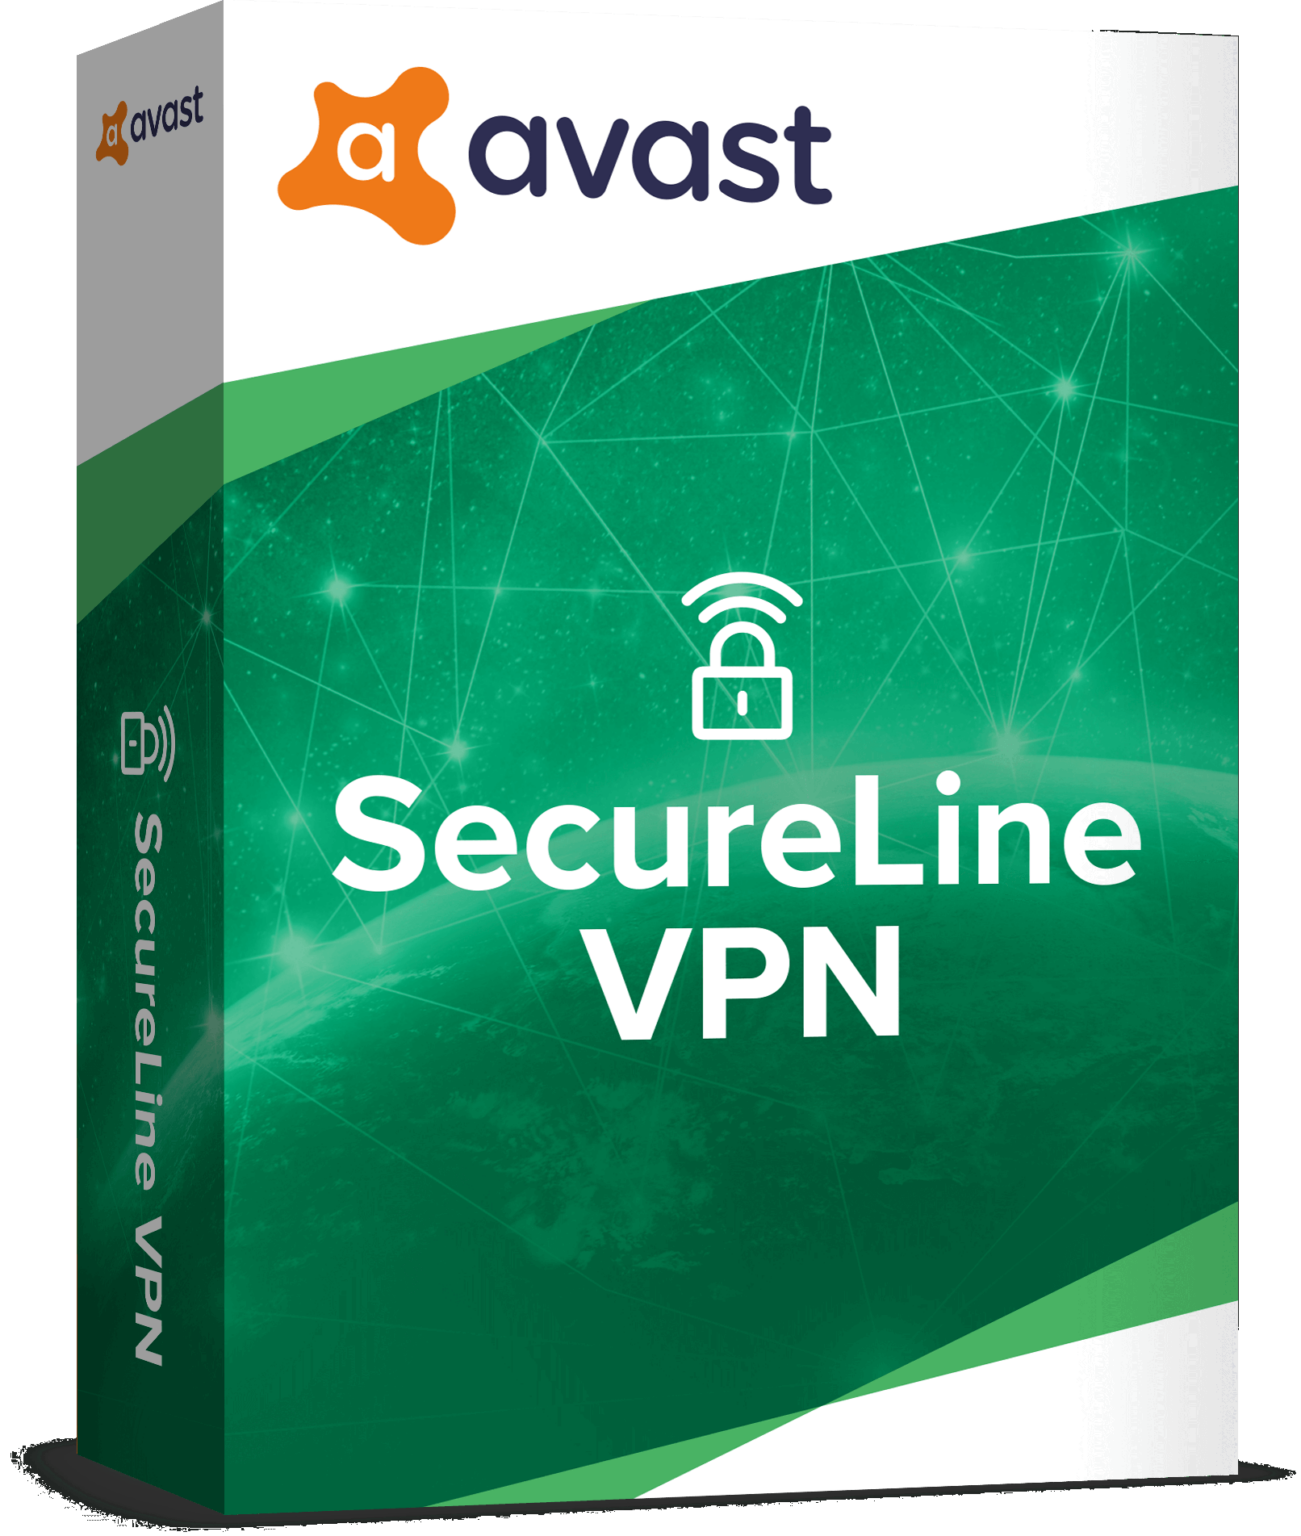 avast secureline vpn what is it